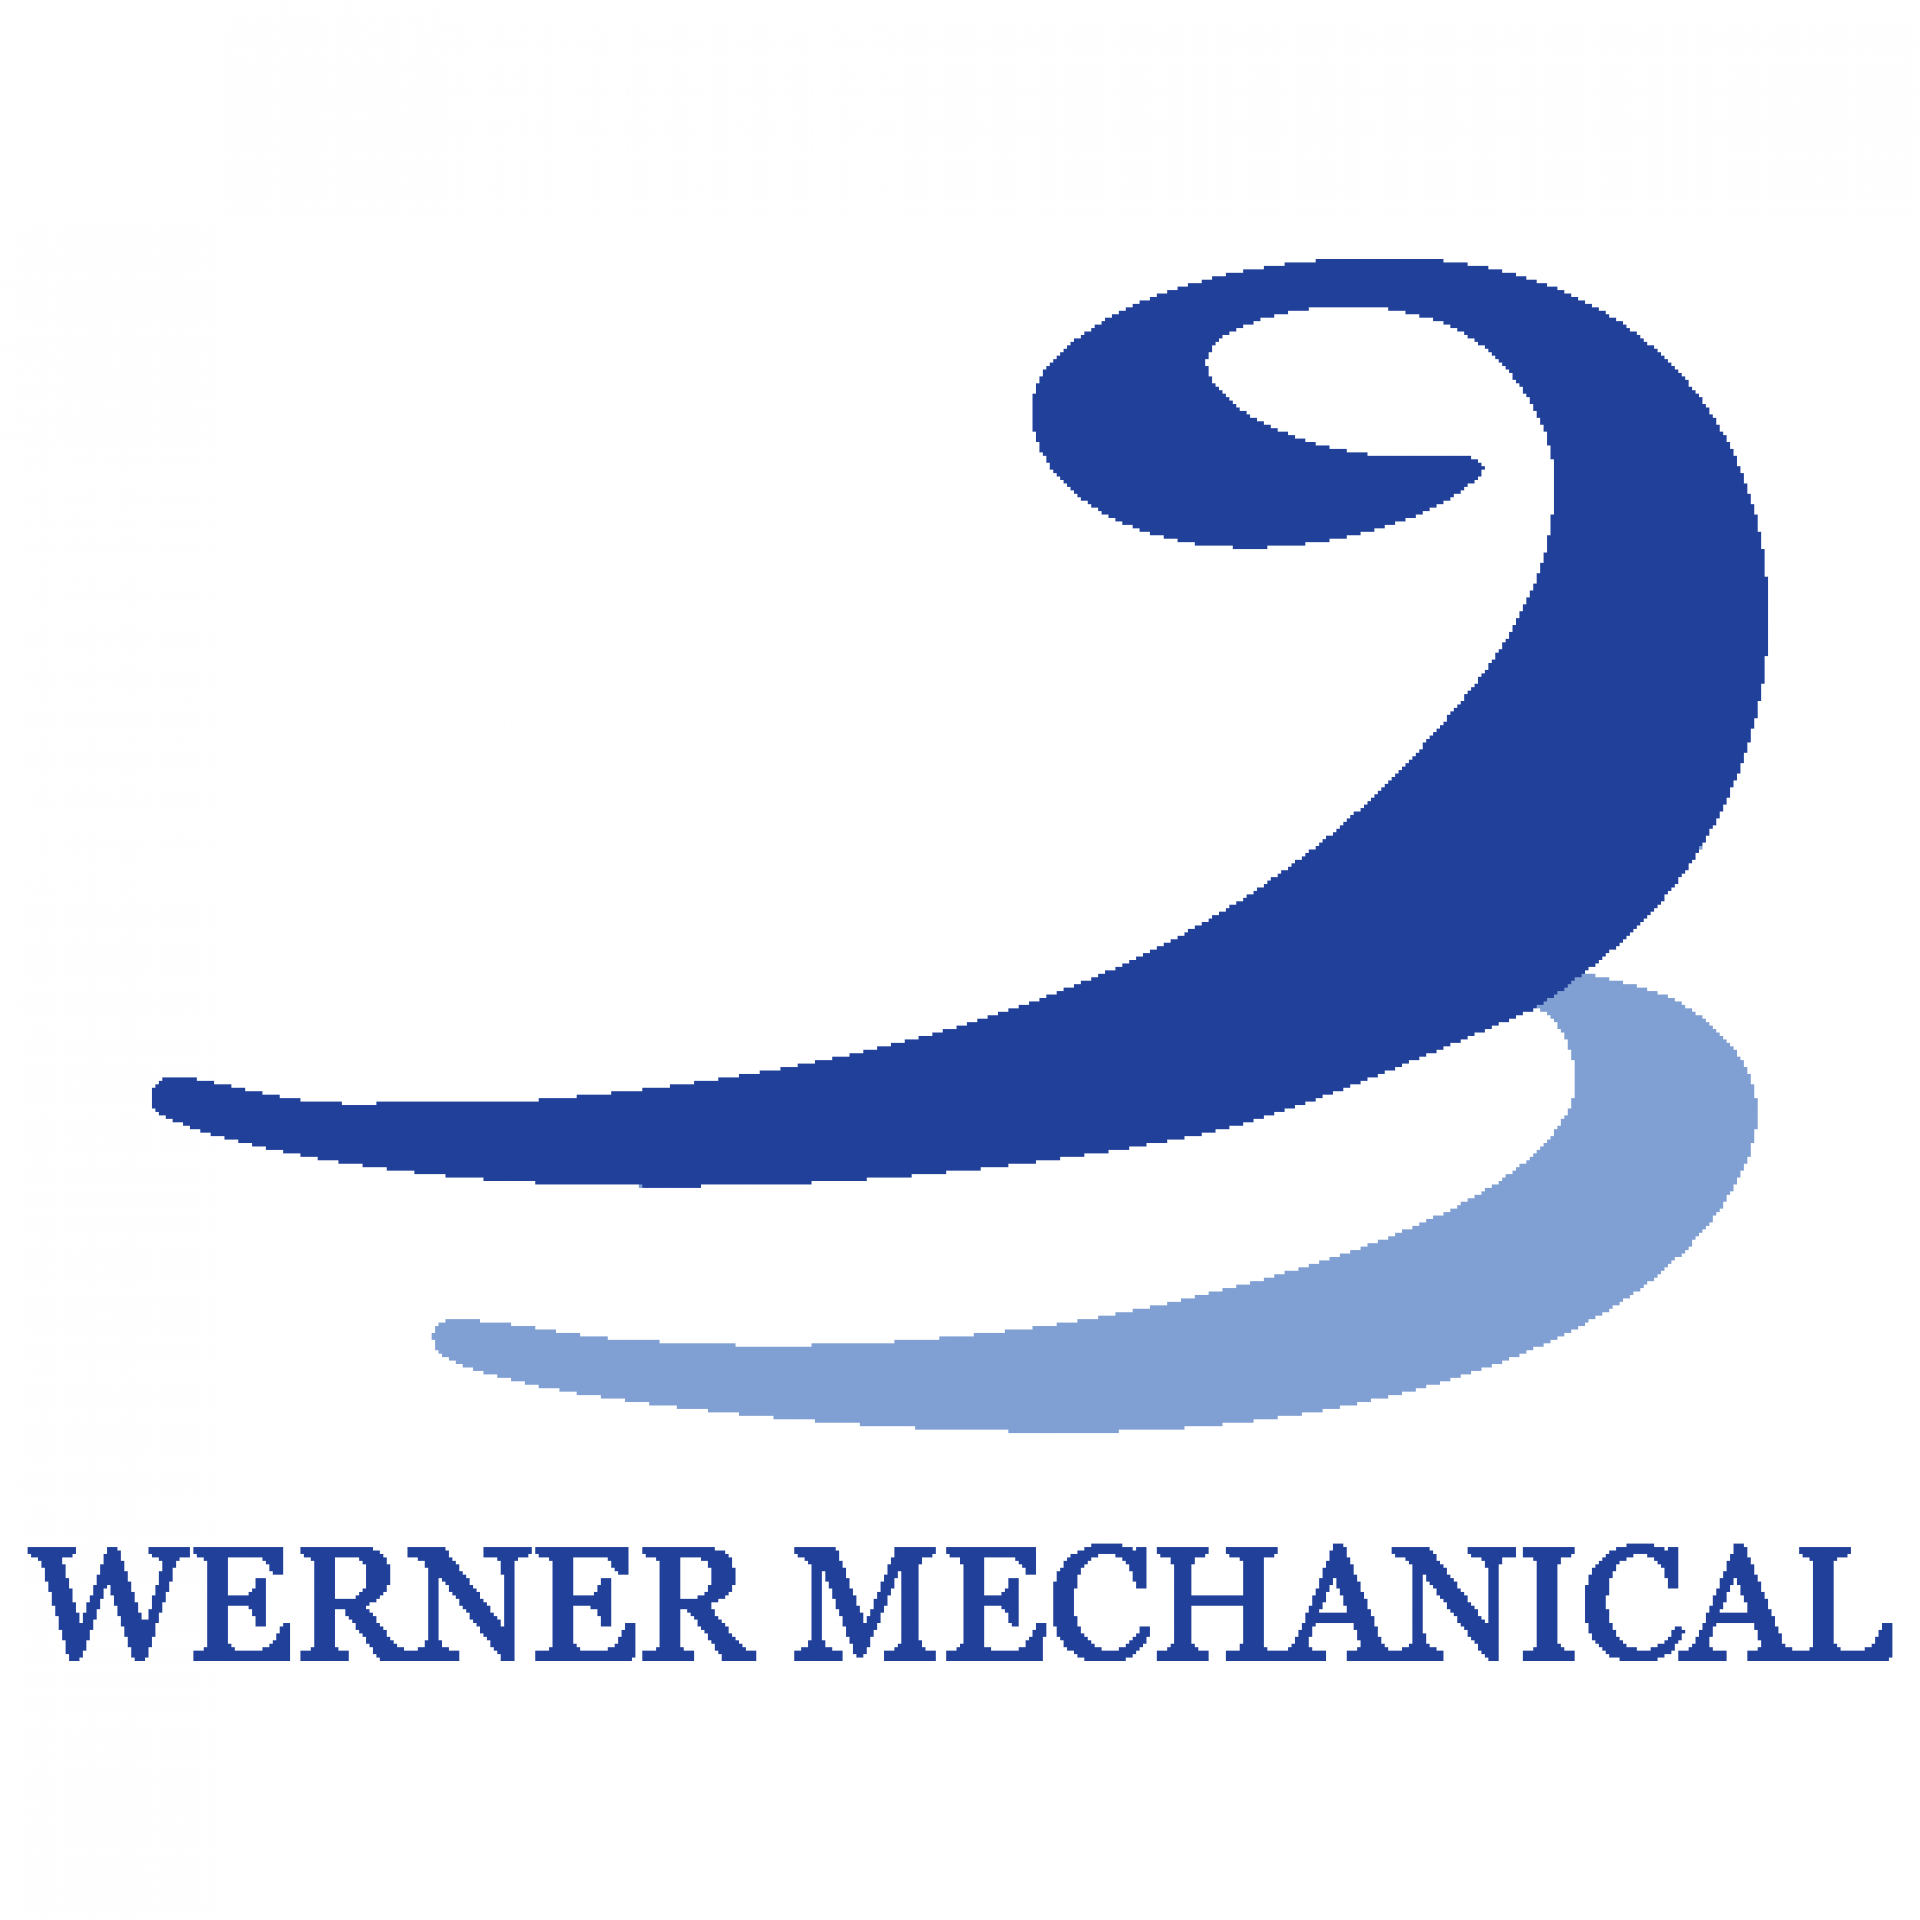 Werner Mechanical company logo